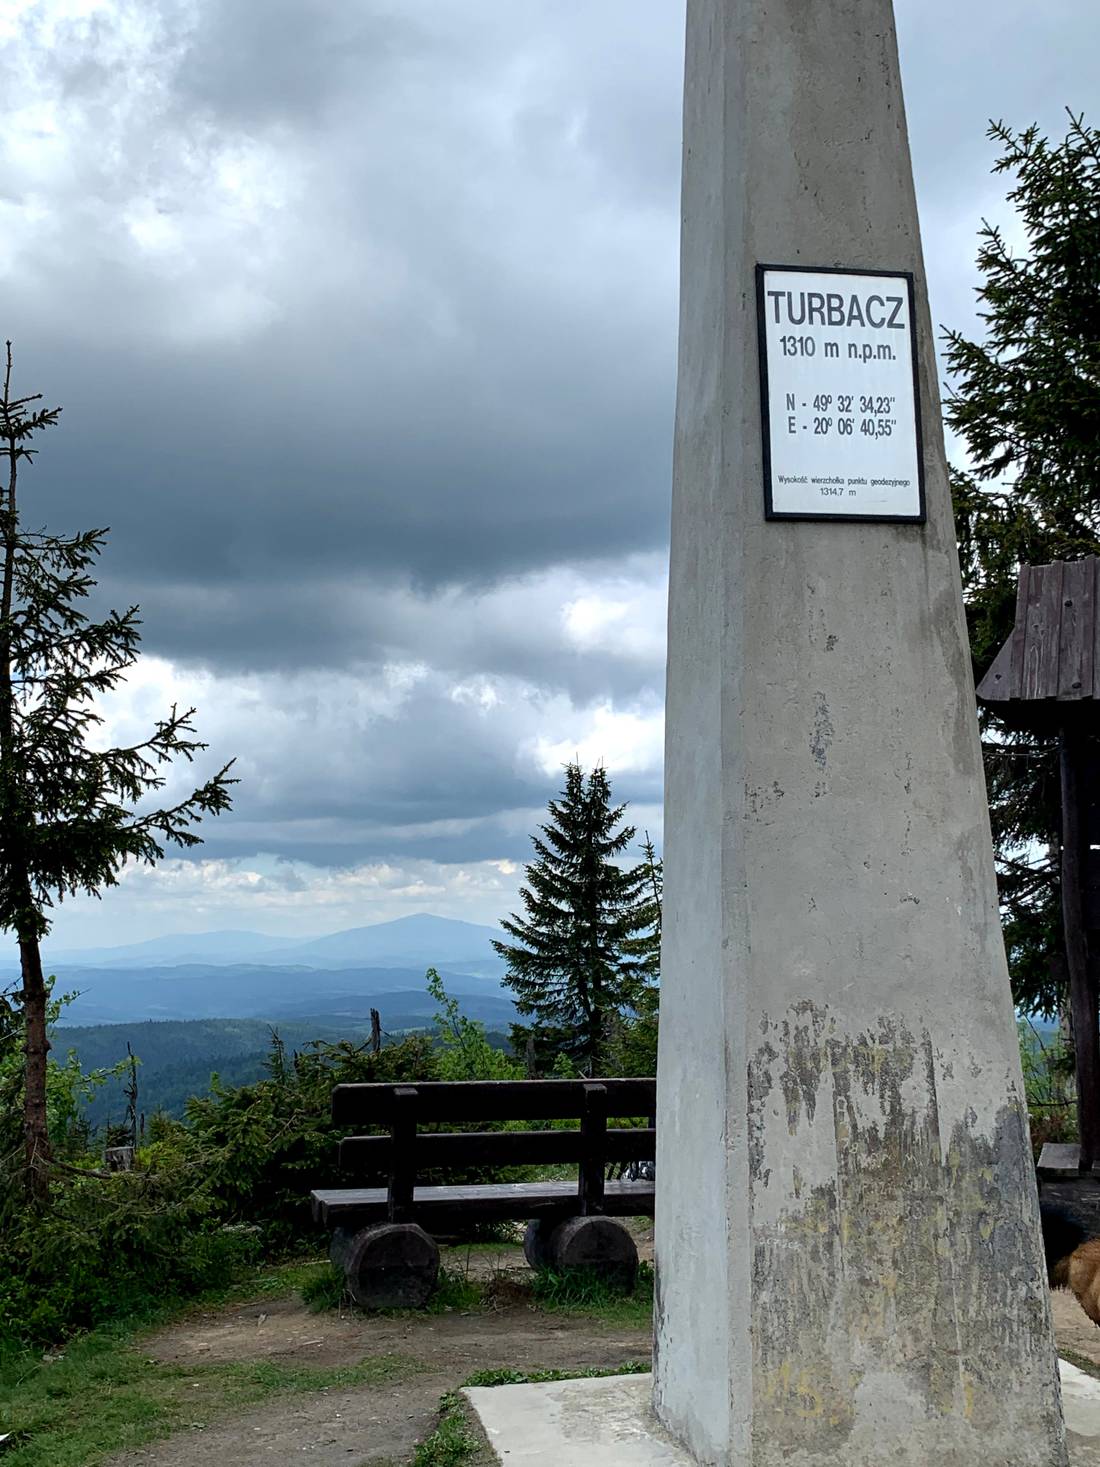 The summit of Turbacz